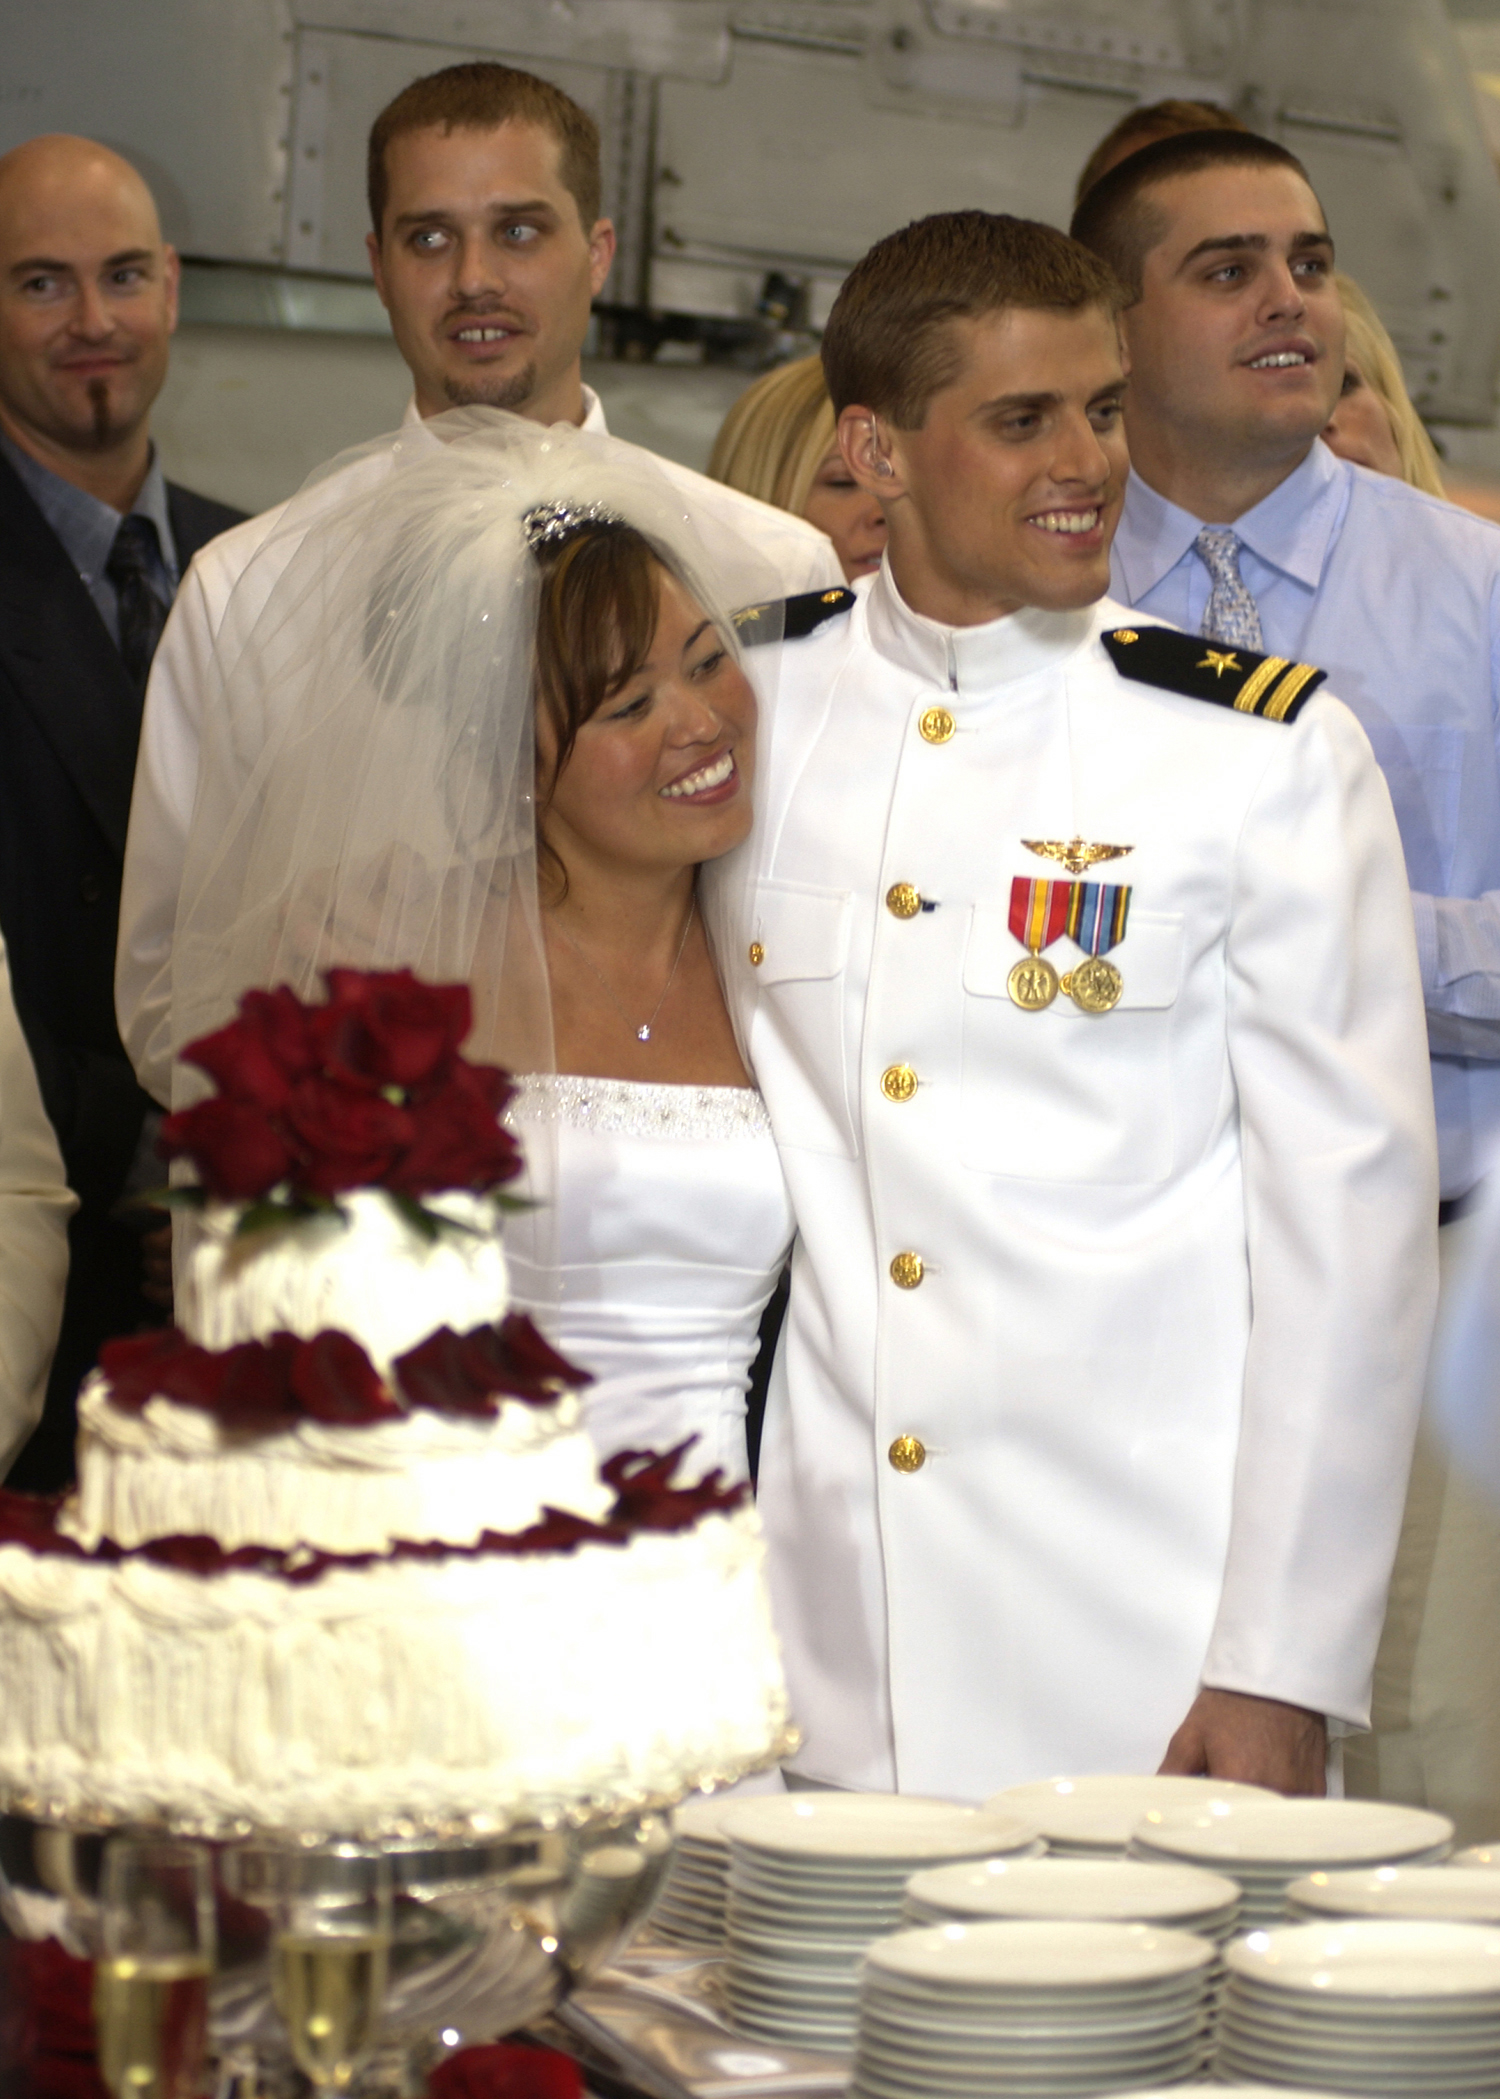 US Navy 030501-N-8590B-003 Lieutenant David Kozminski, a Naval Aviator assigned to Sea Control Squadron Thirty Five (VS-35) and his bride prepare to cut their wedding cake